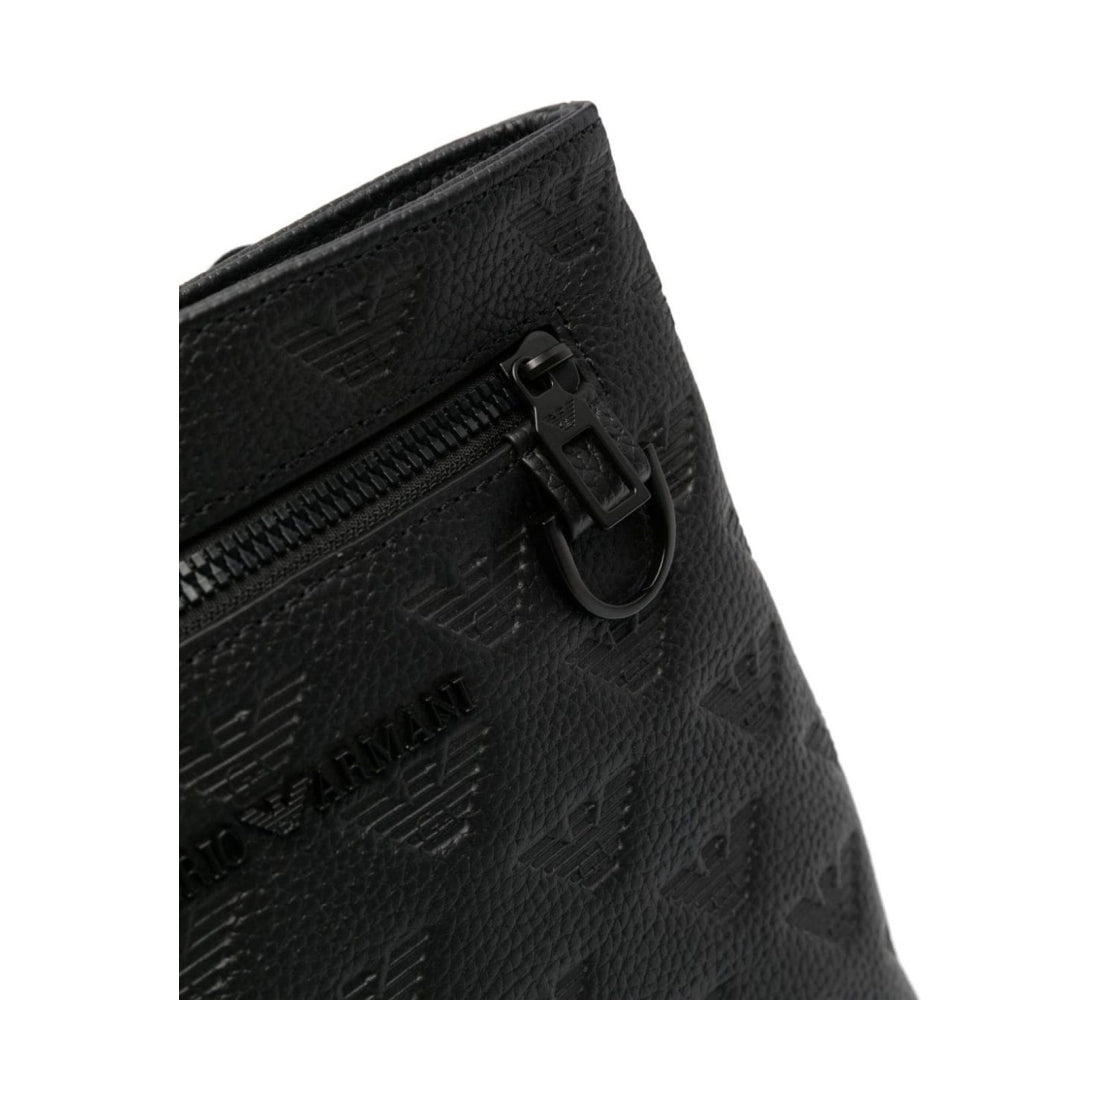 Emporio Armani mens black casual messenger bag | Vilbury London